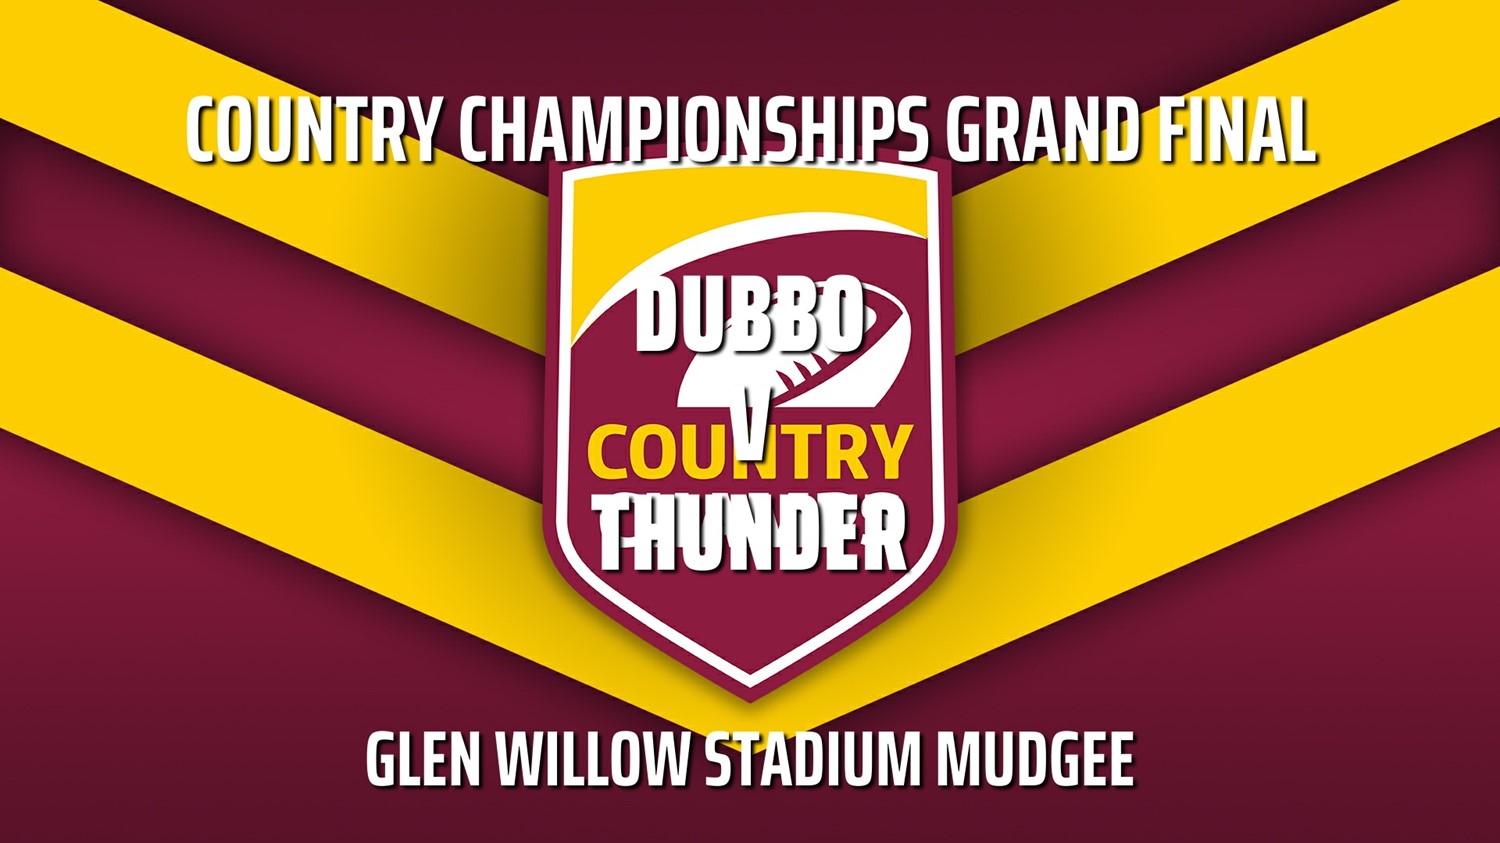 231015-Country Championships Grand Final - Men's Open - Dubbo Touch Football v Orange Thunder Minigame Slate Image